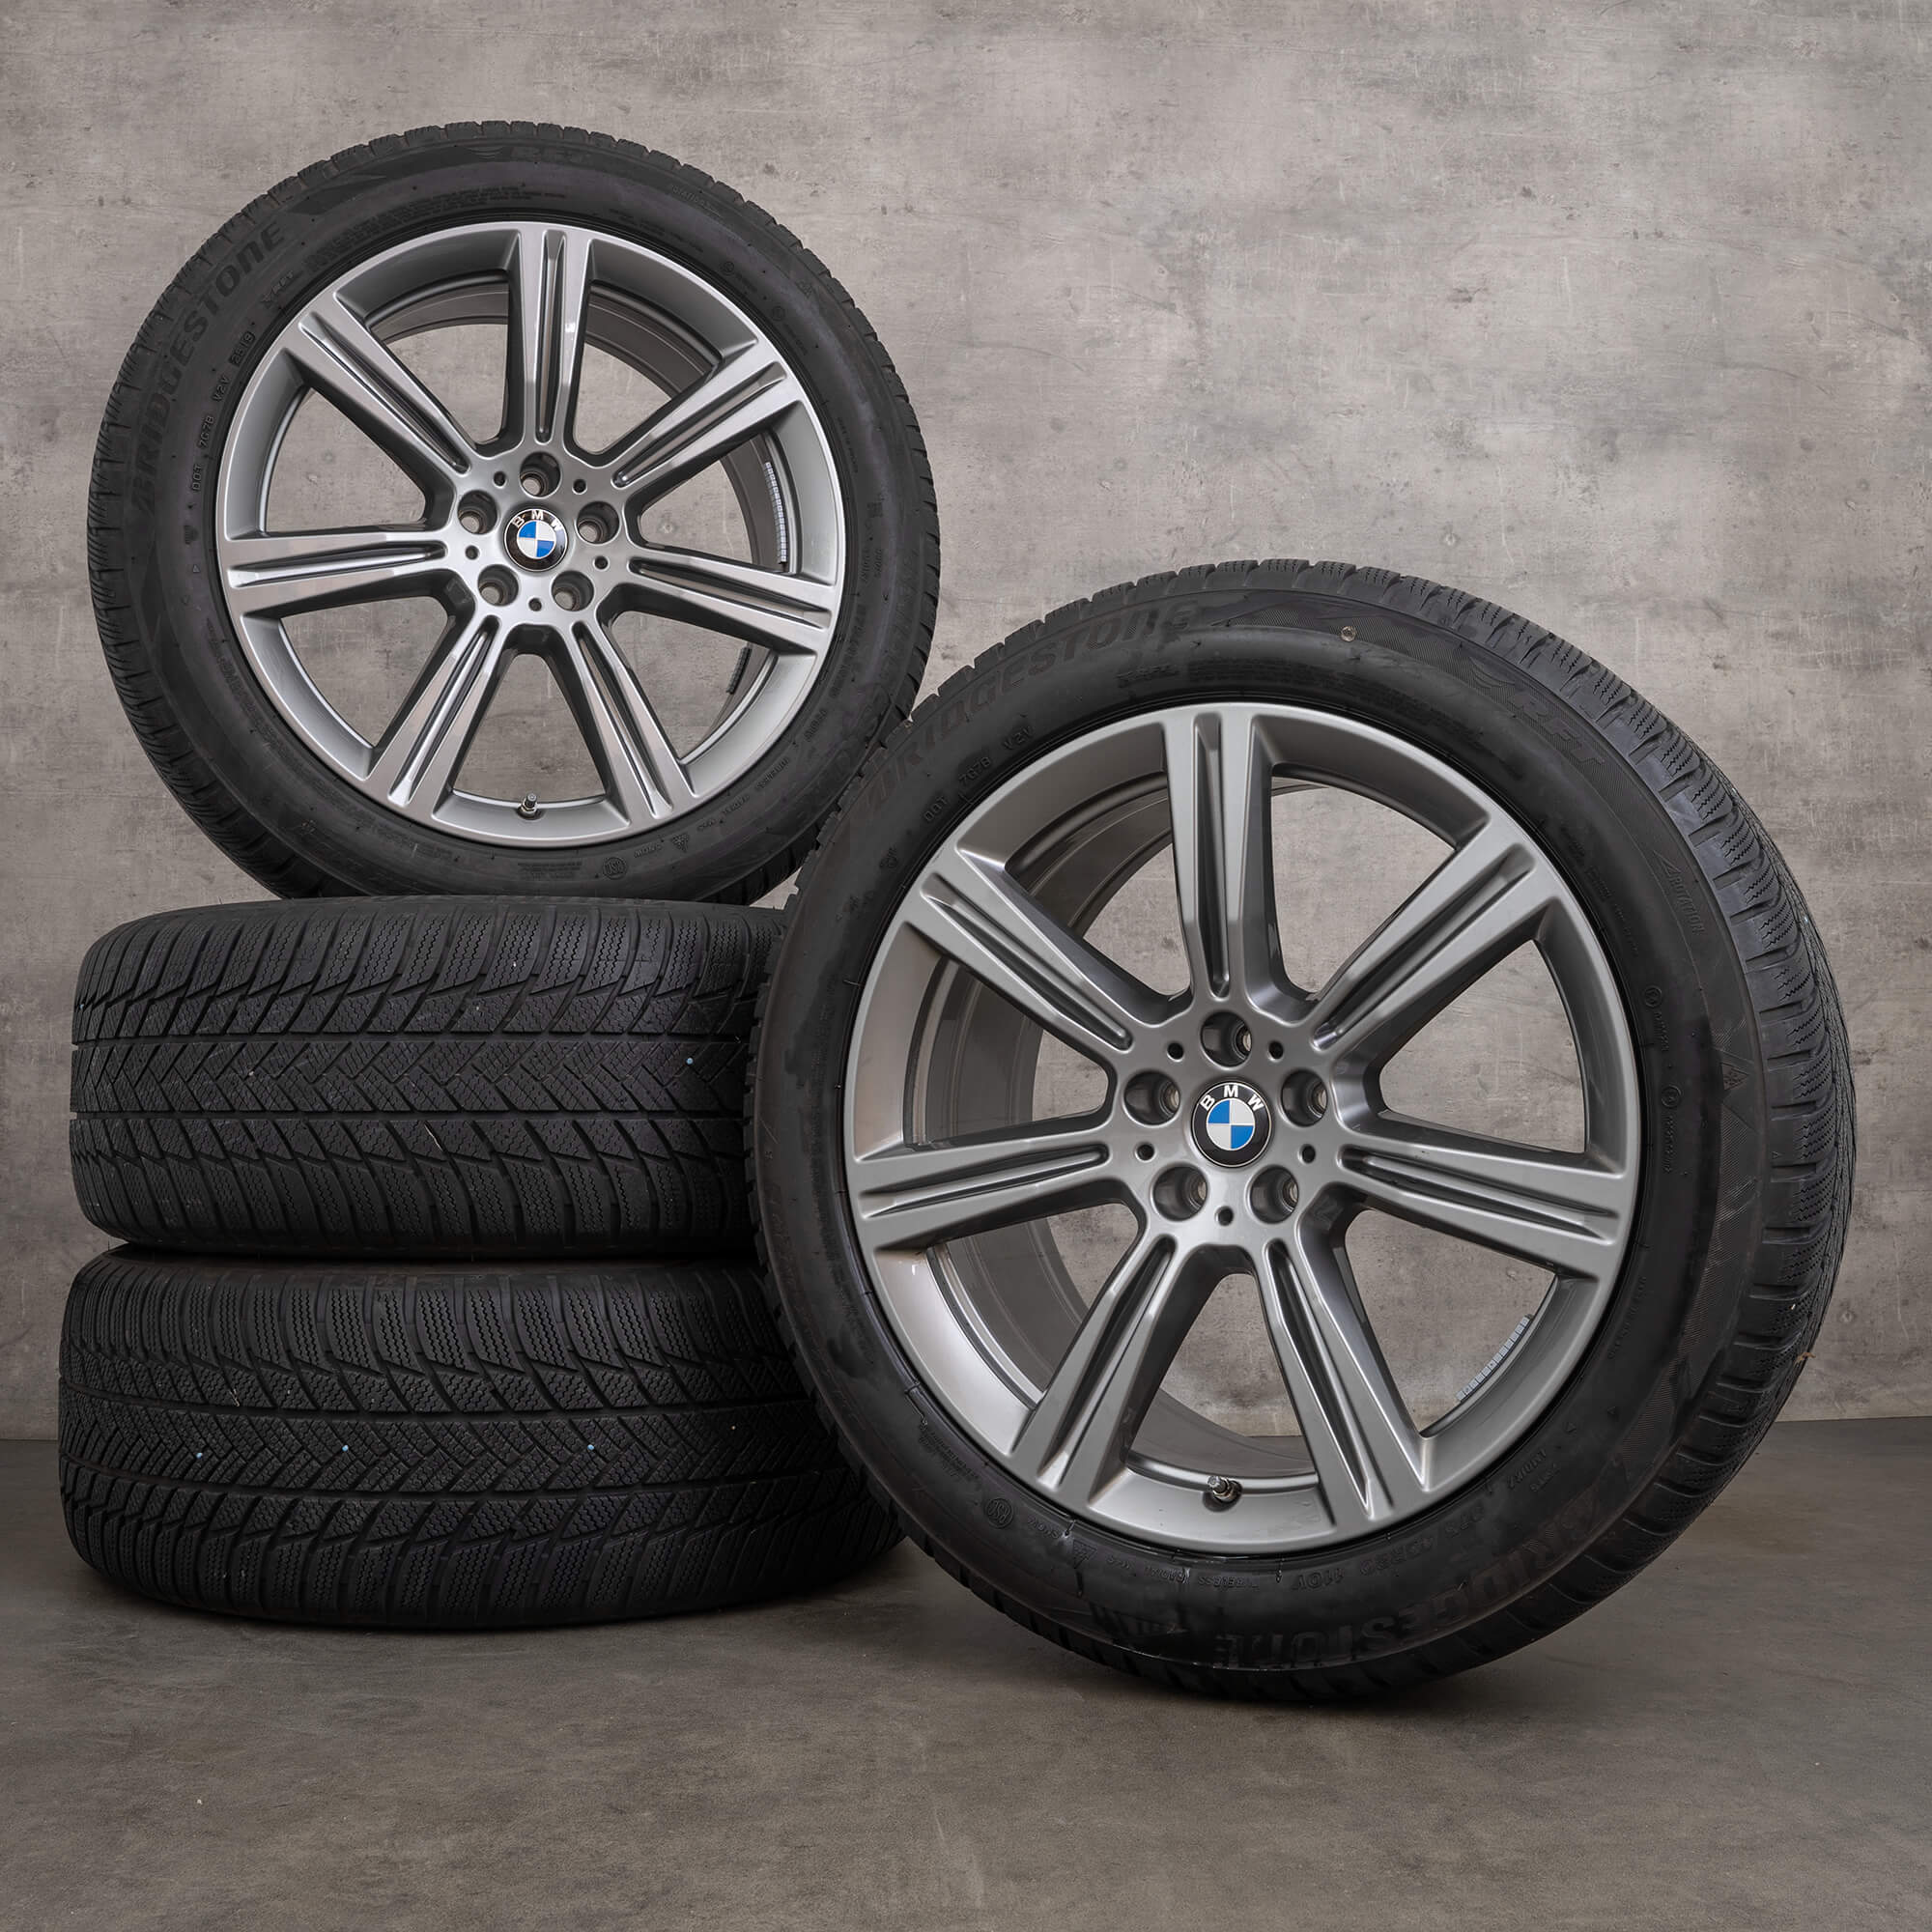 BMW X5 G05 X6 G06 OEM winter wheels tires 20 inch rims 6883753